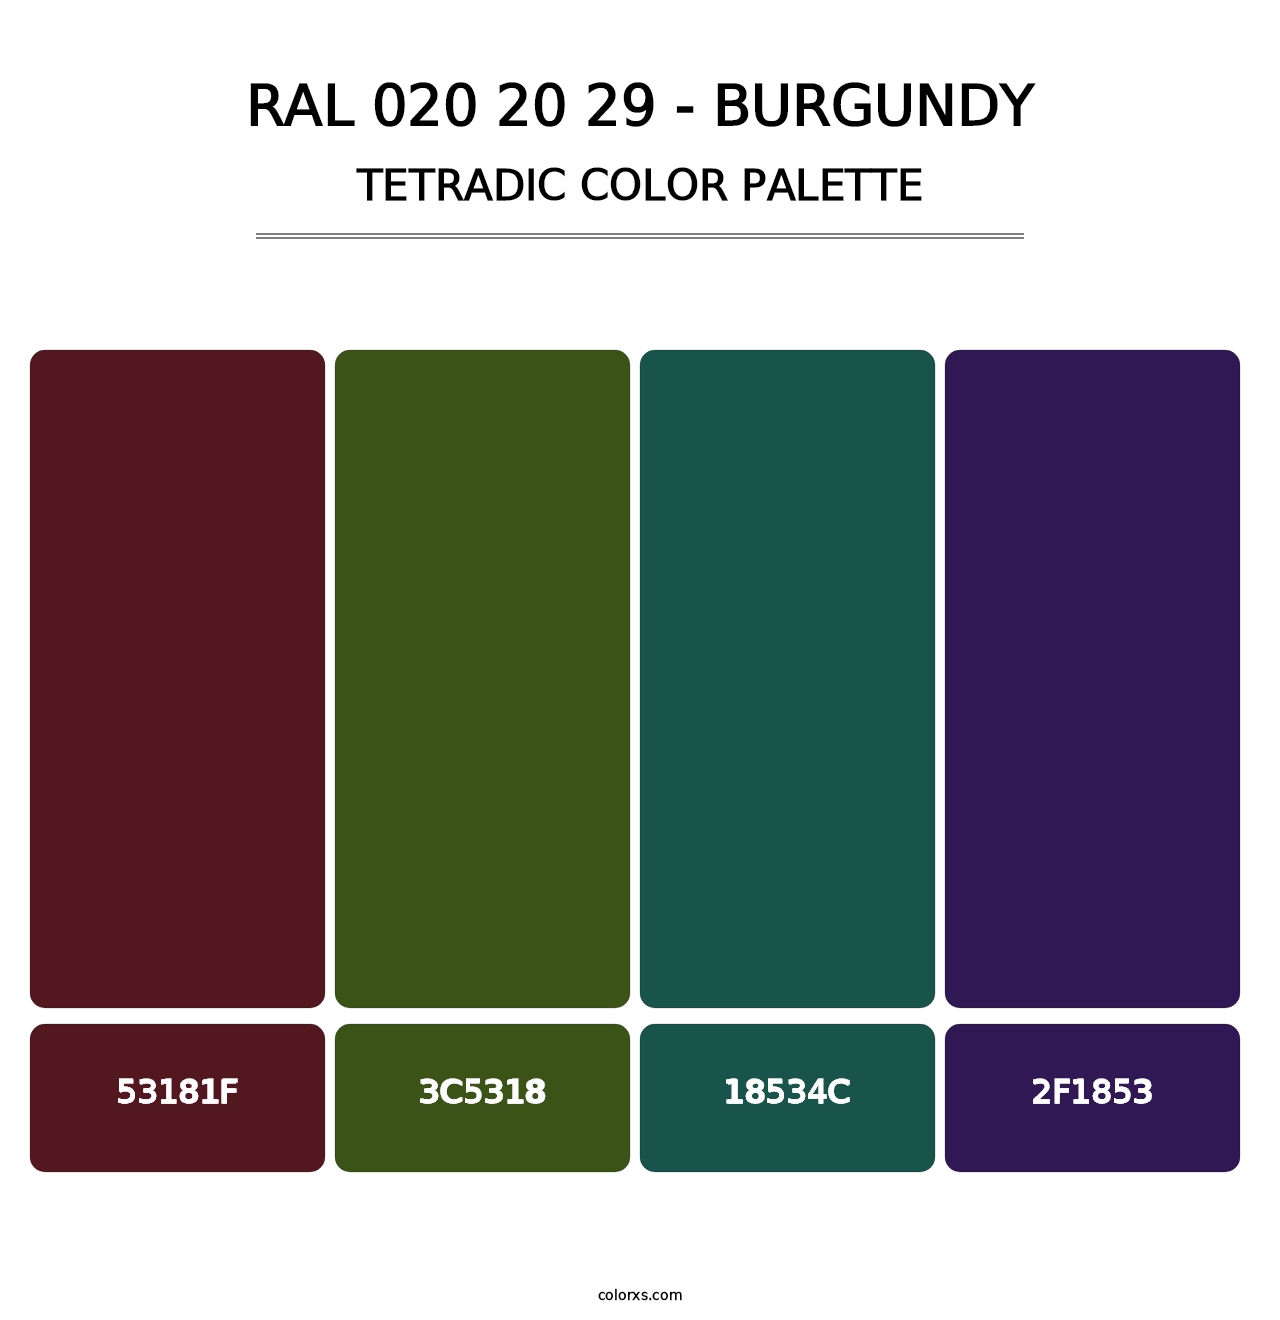 RAL 020 20 29 - Burgundy - Tetradic Color Palette